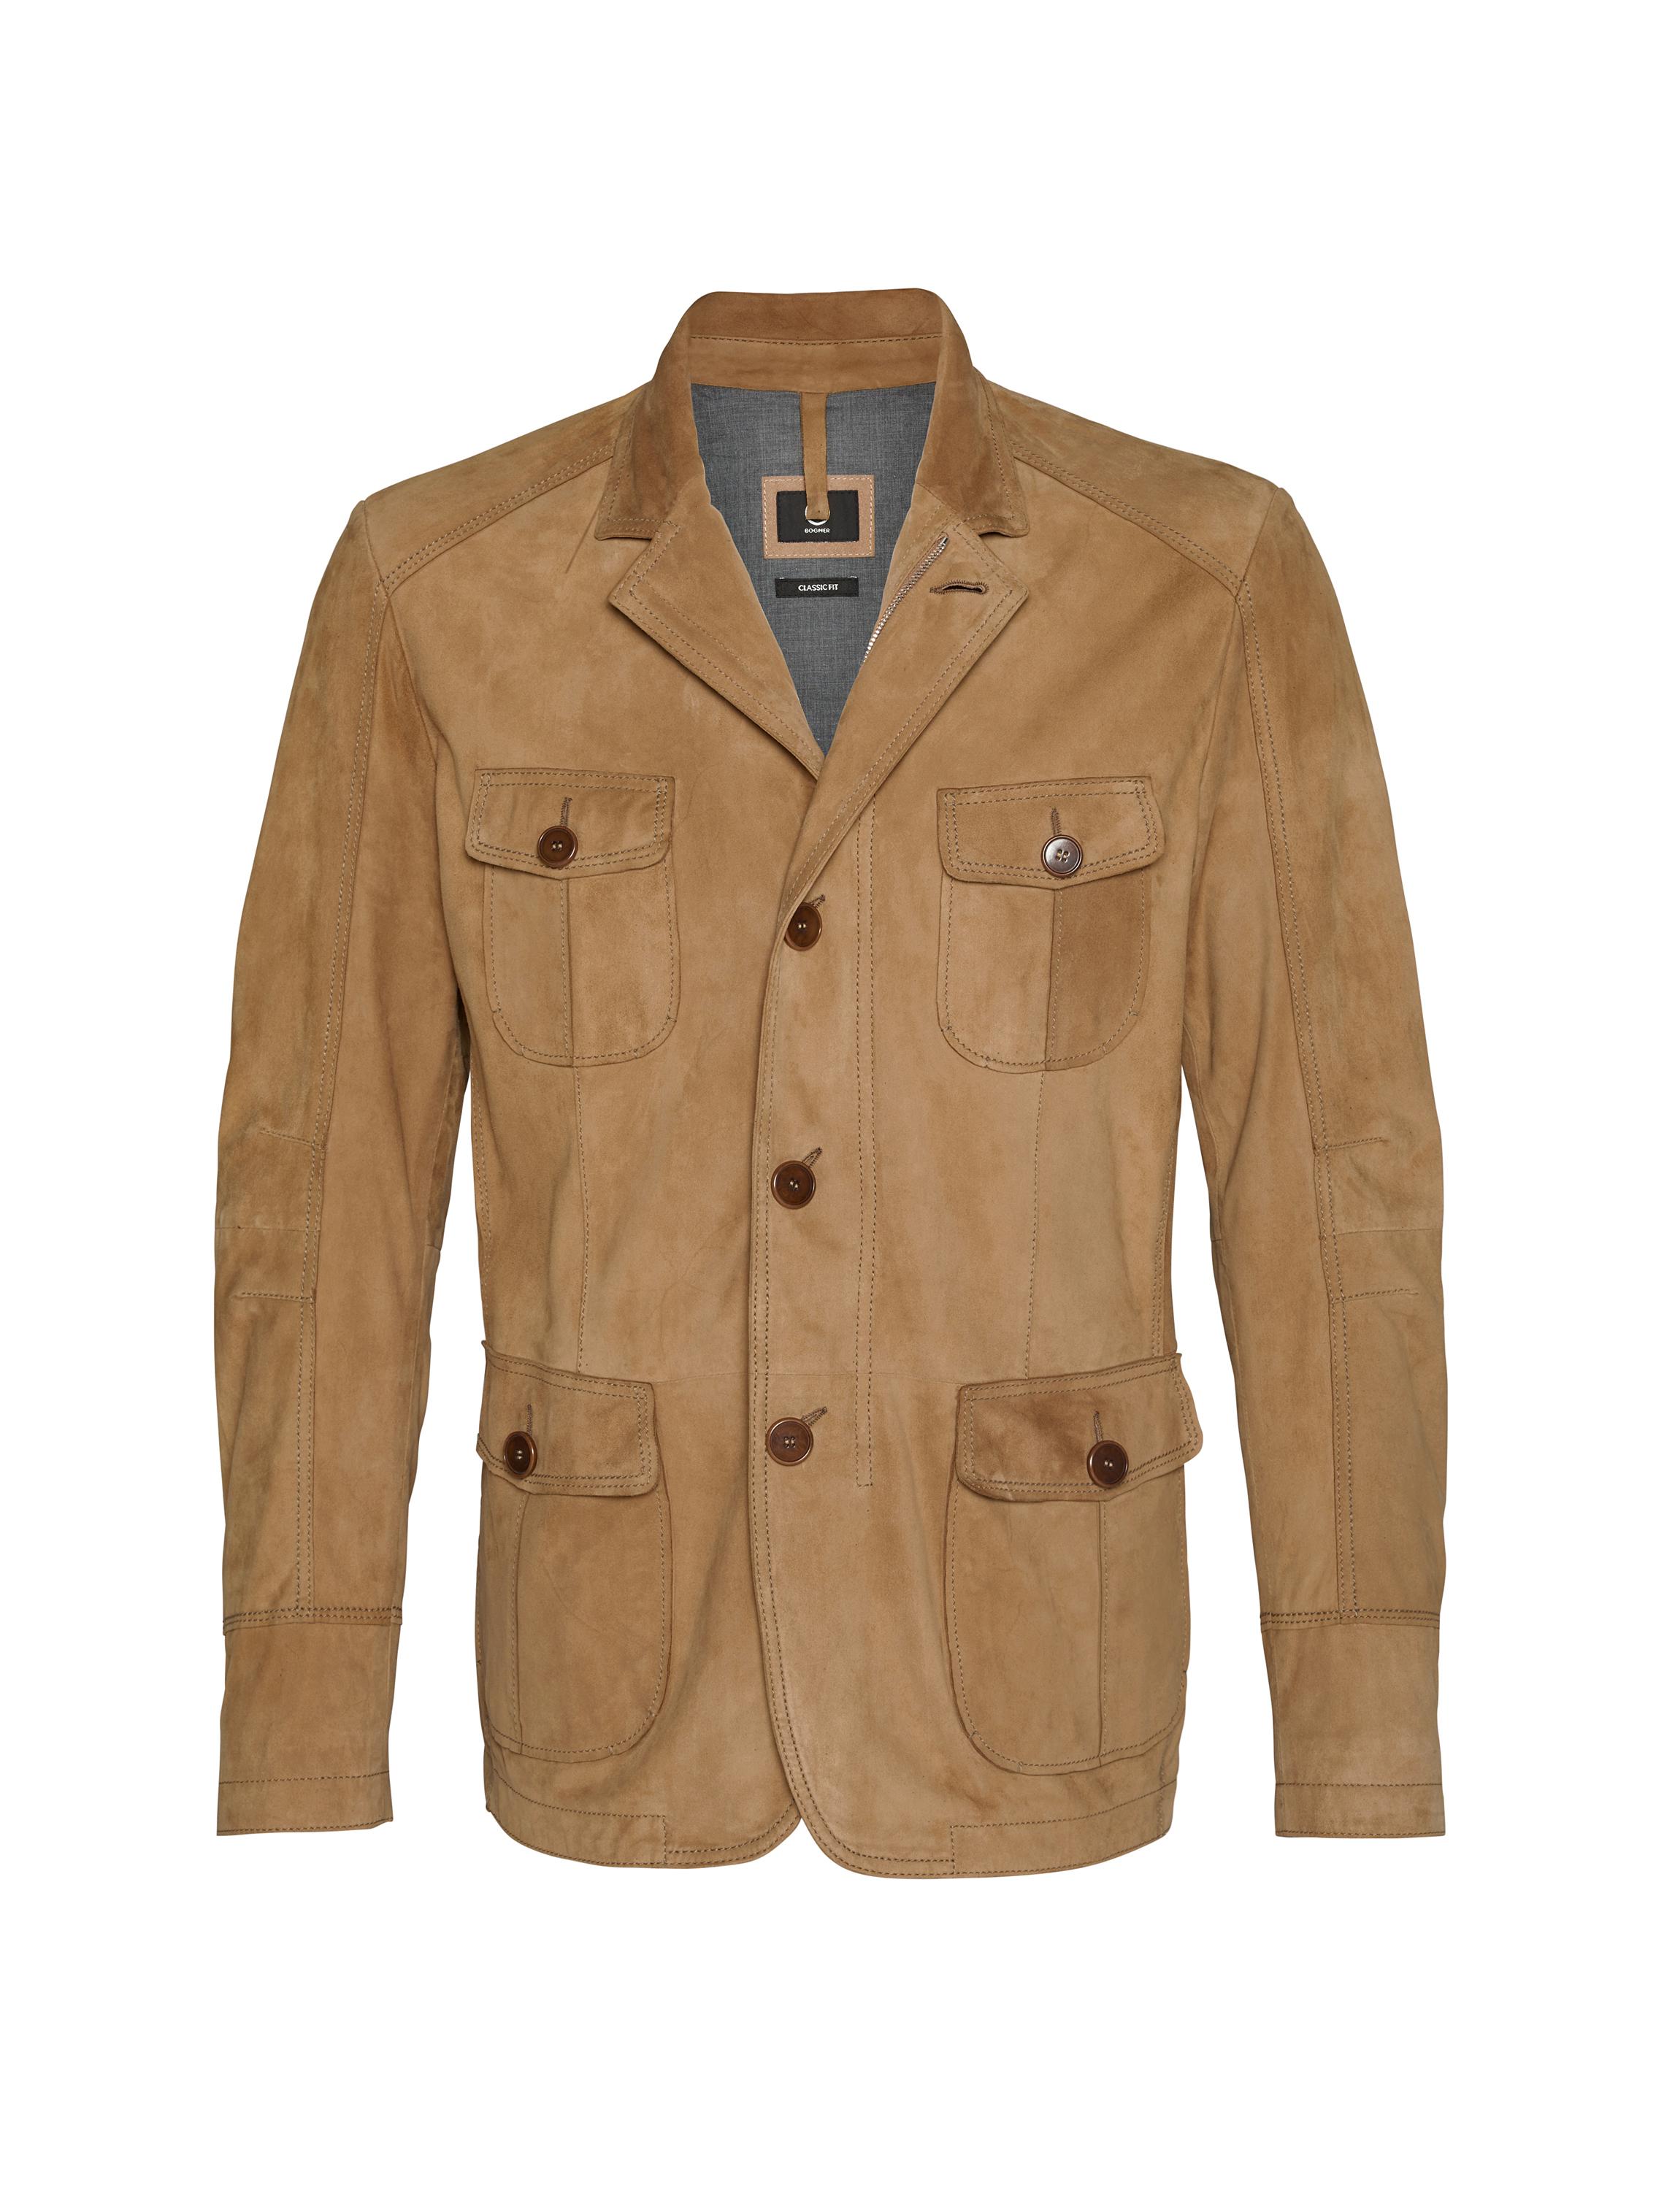 Bogner Leather Field Jacket Glenn in Oak (Brown) for Men - Lyst